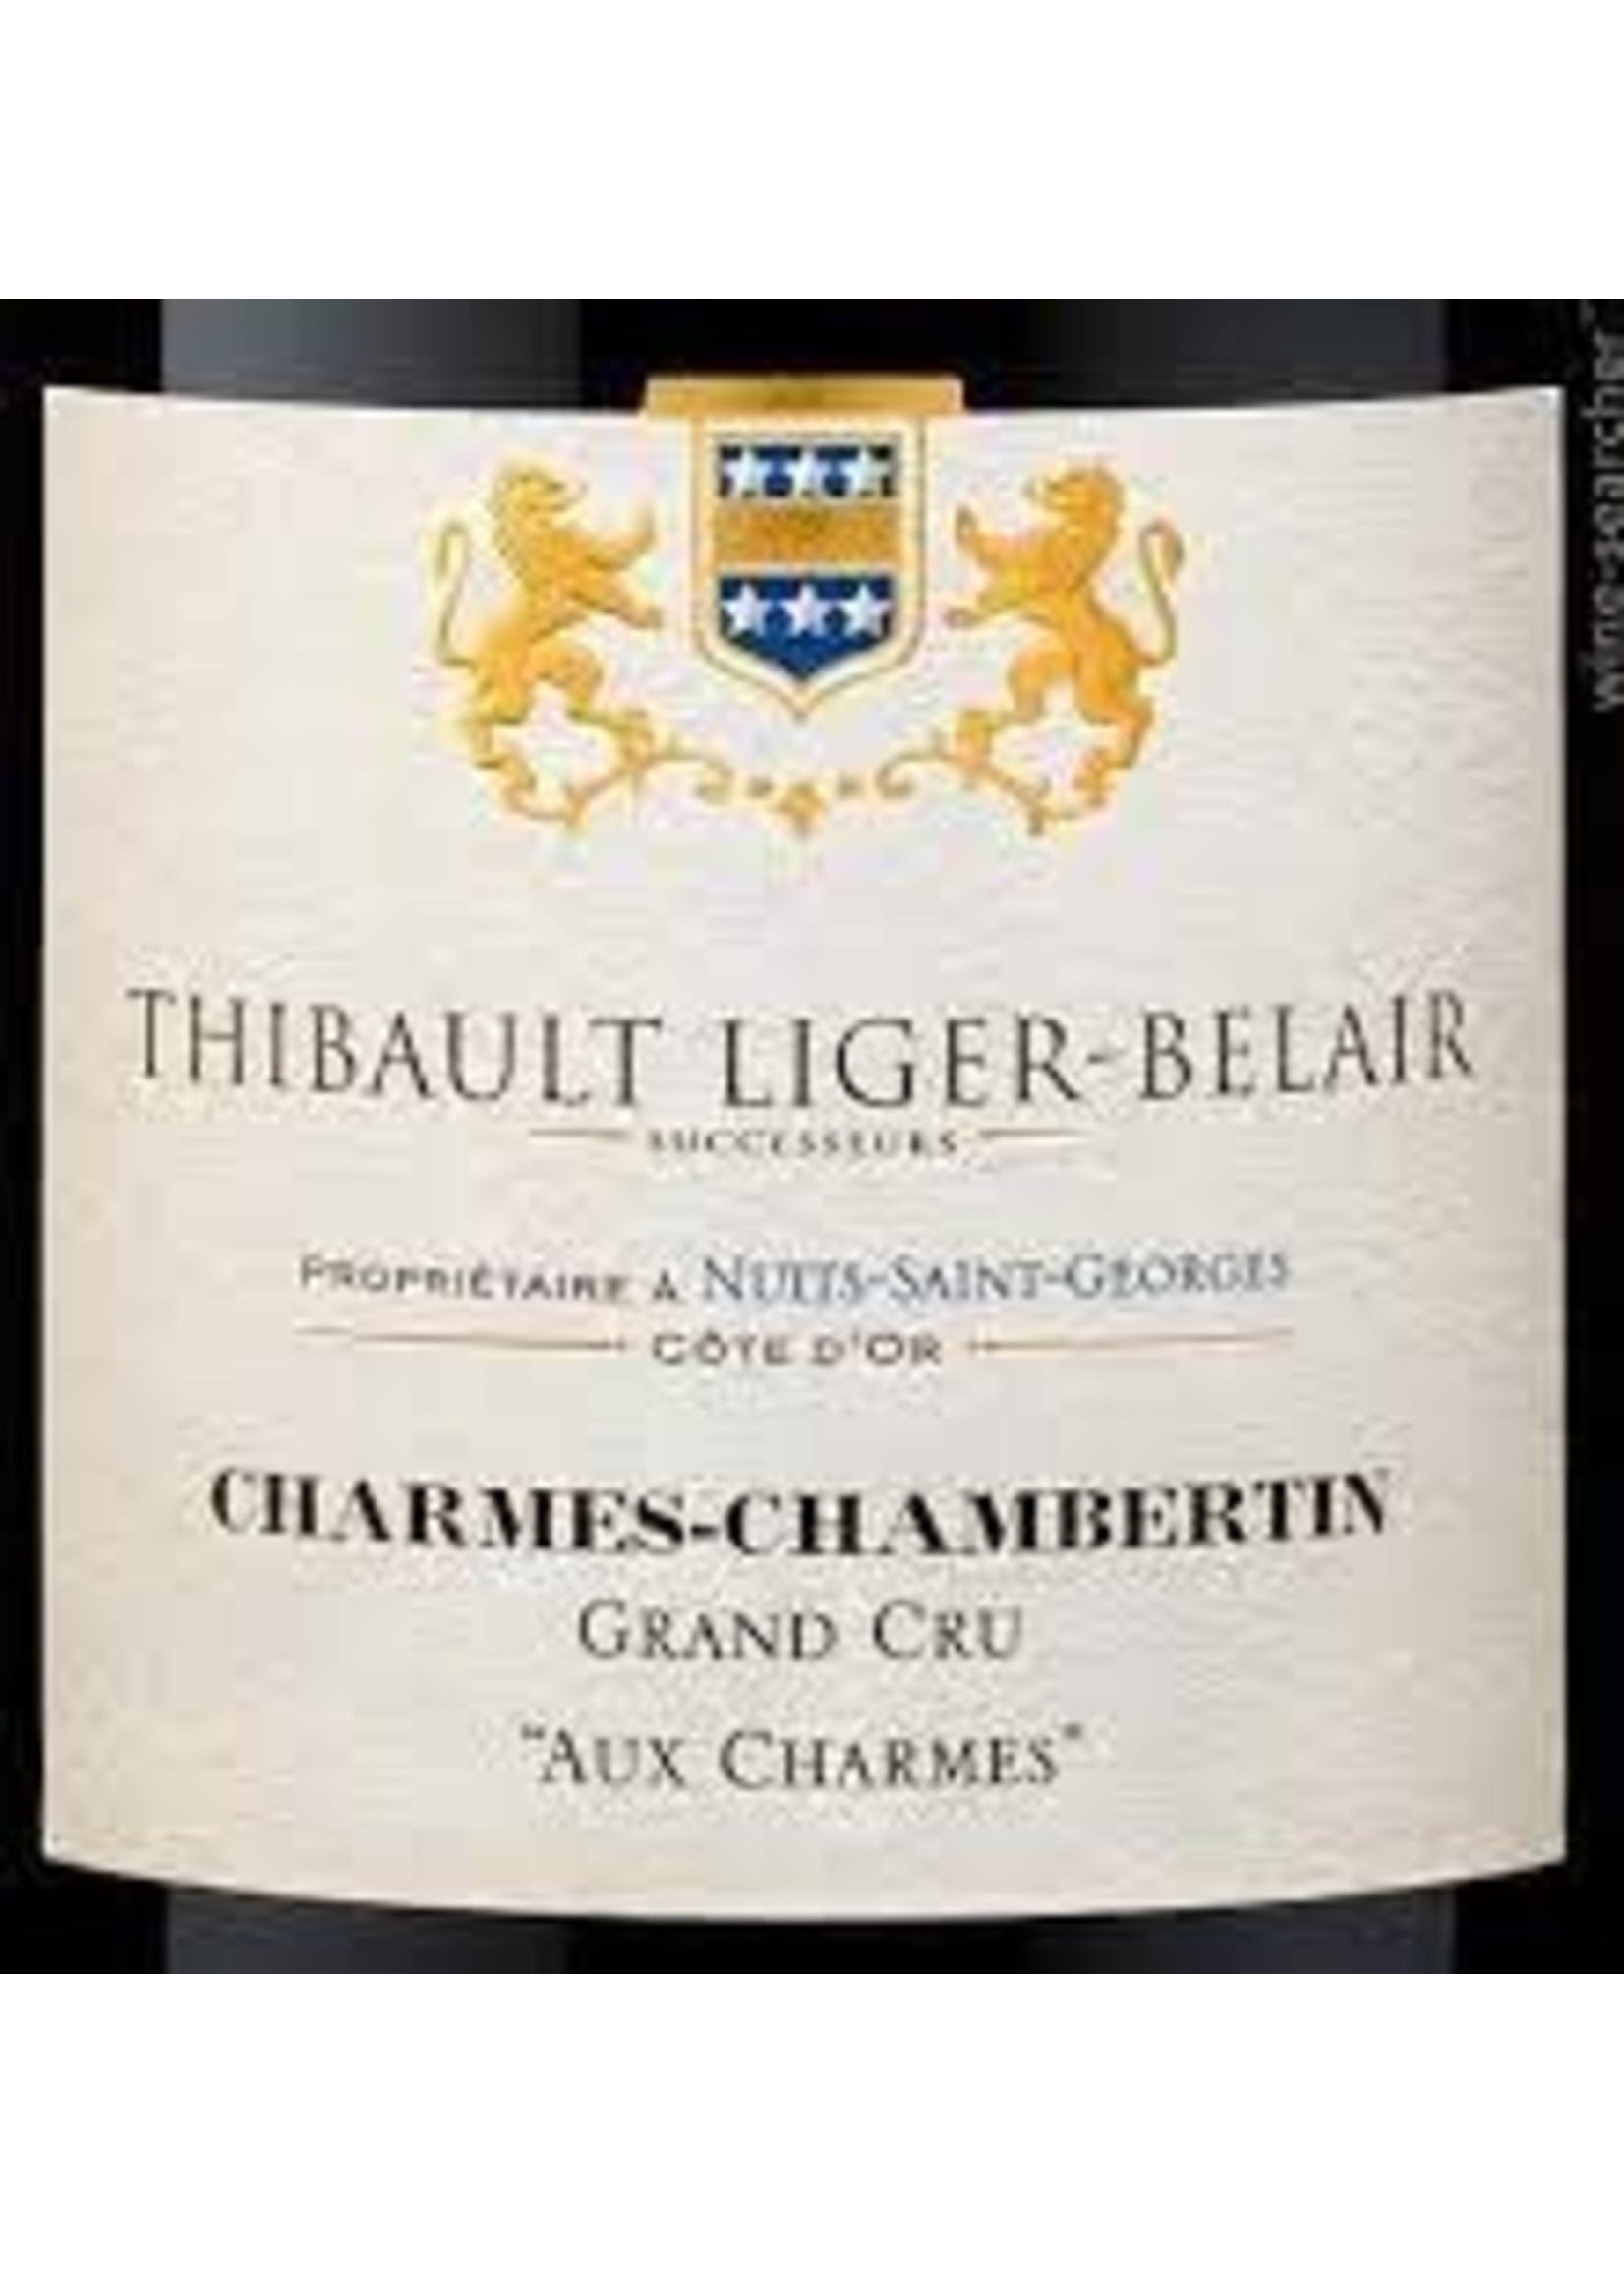 Thibault Liger-Belair 2019 Charmes-Chambertin Grand Cru 750ml